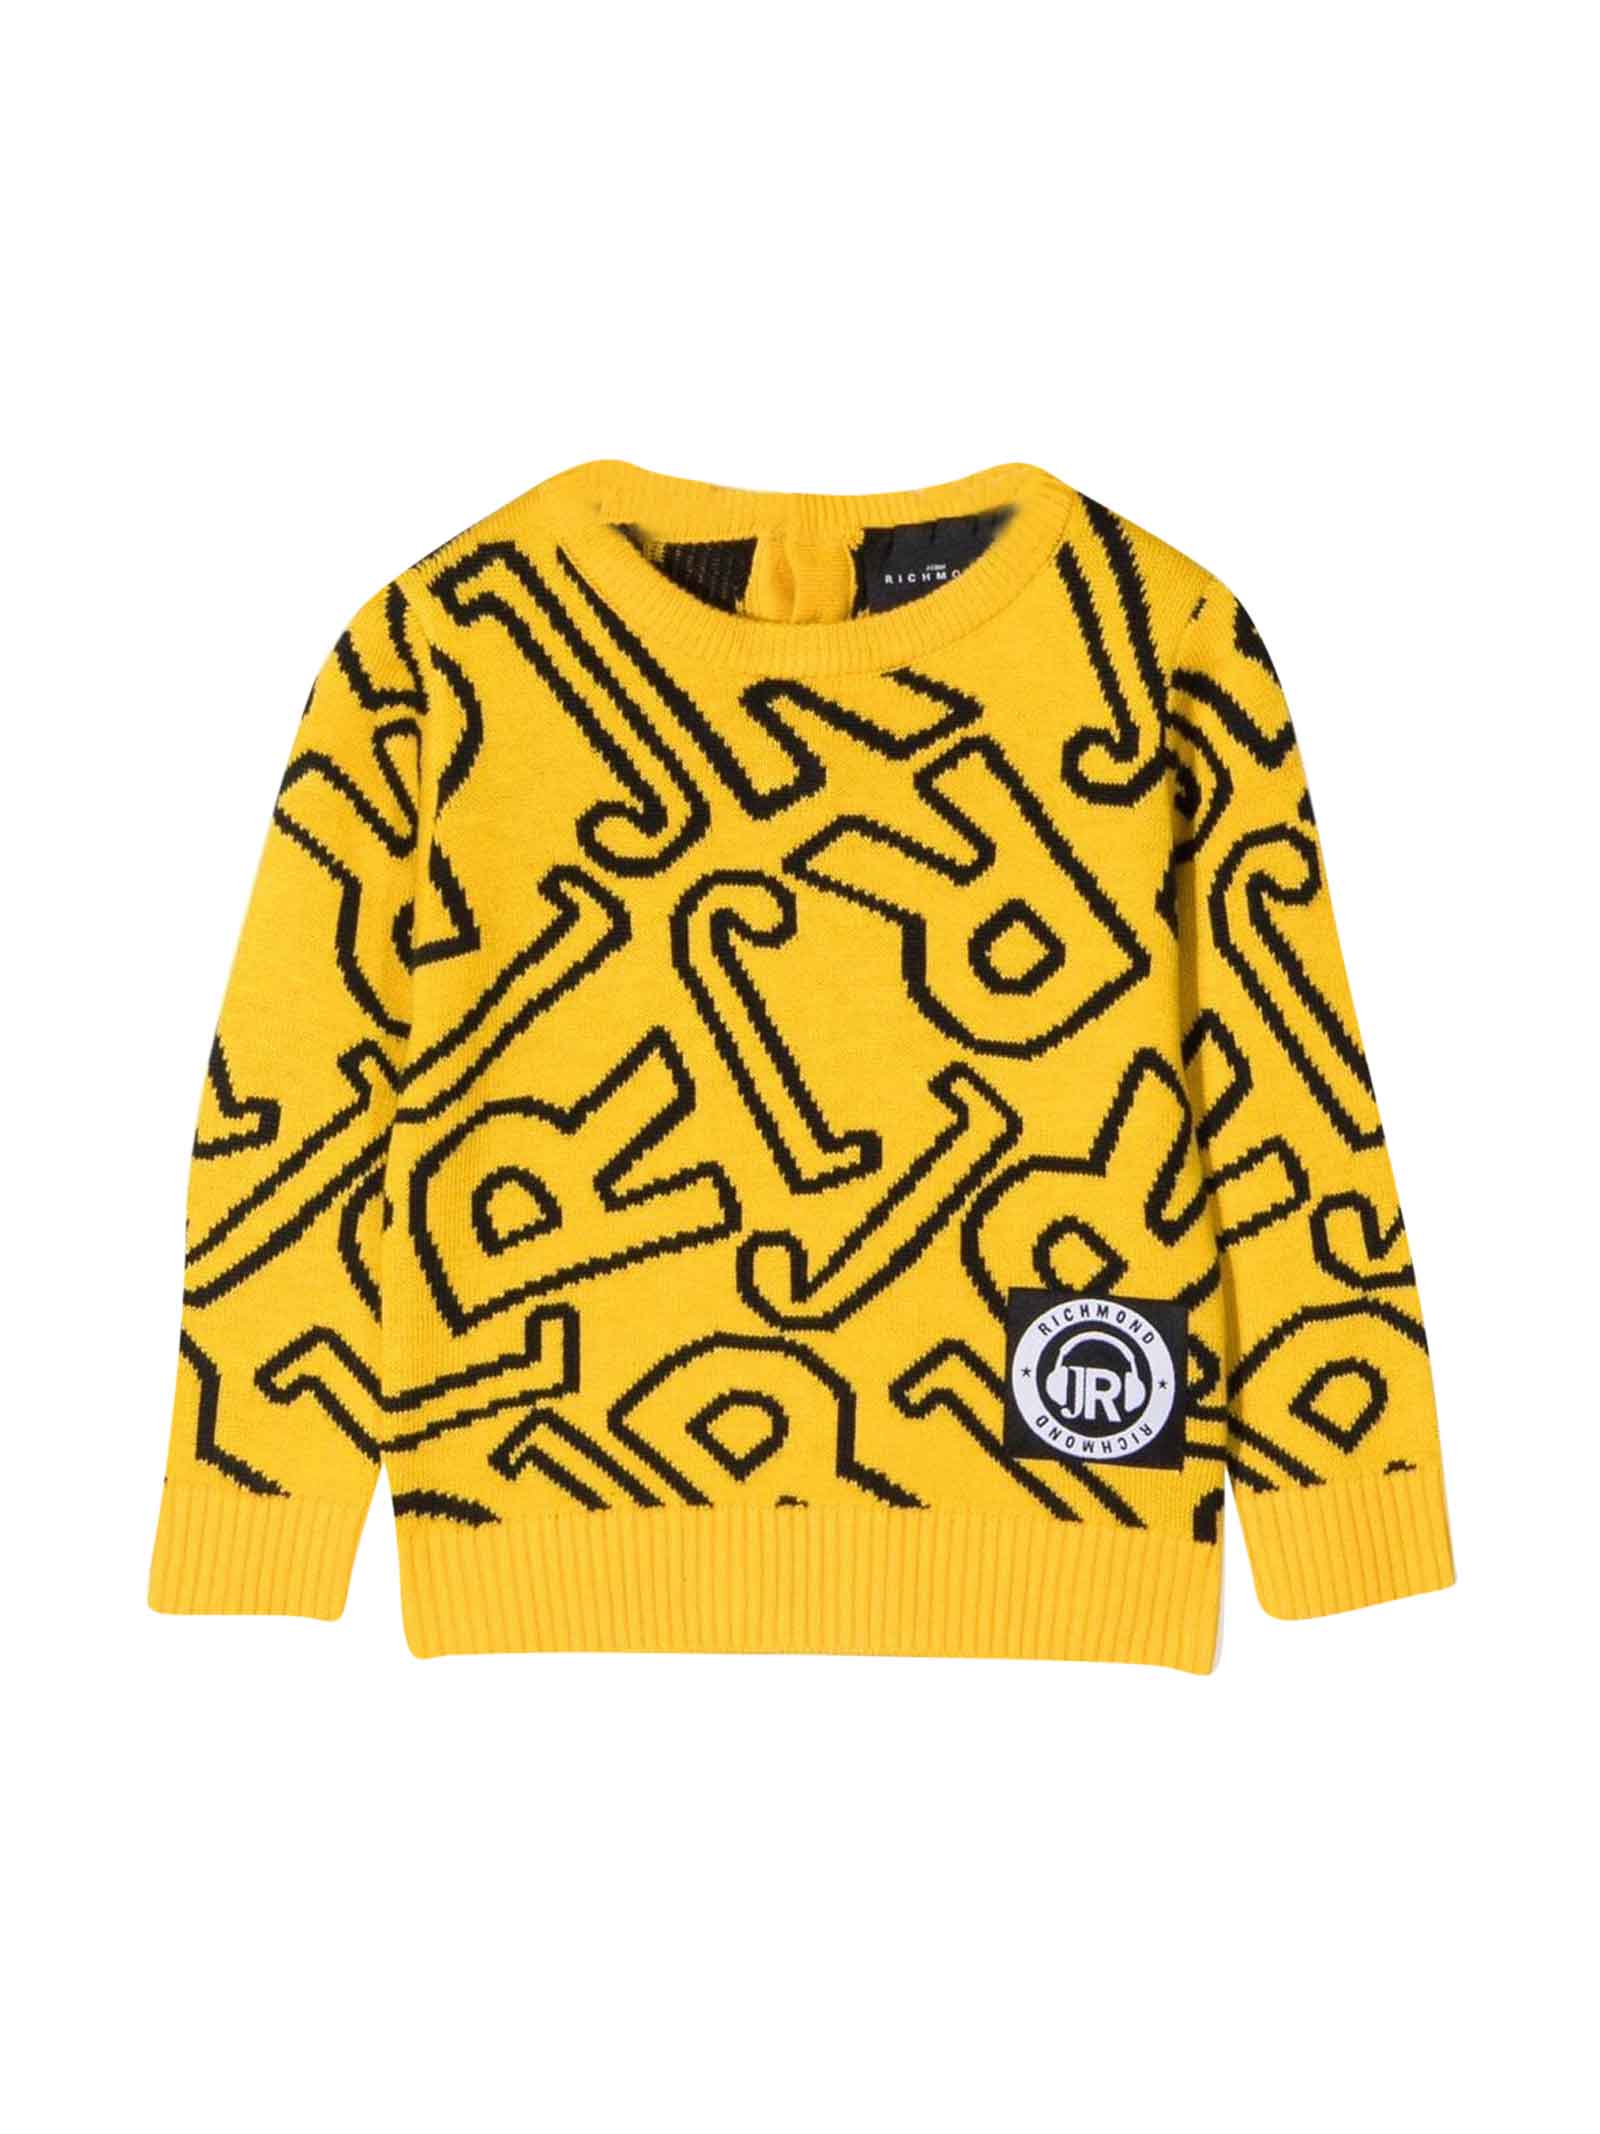 John Richmond Unisex Yellow Sweatshirt